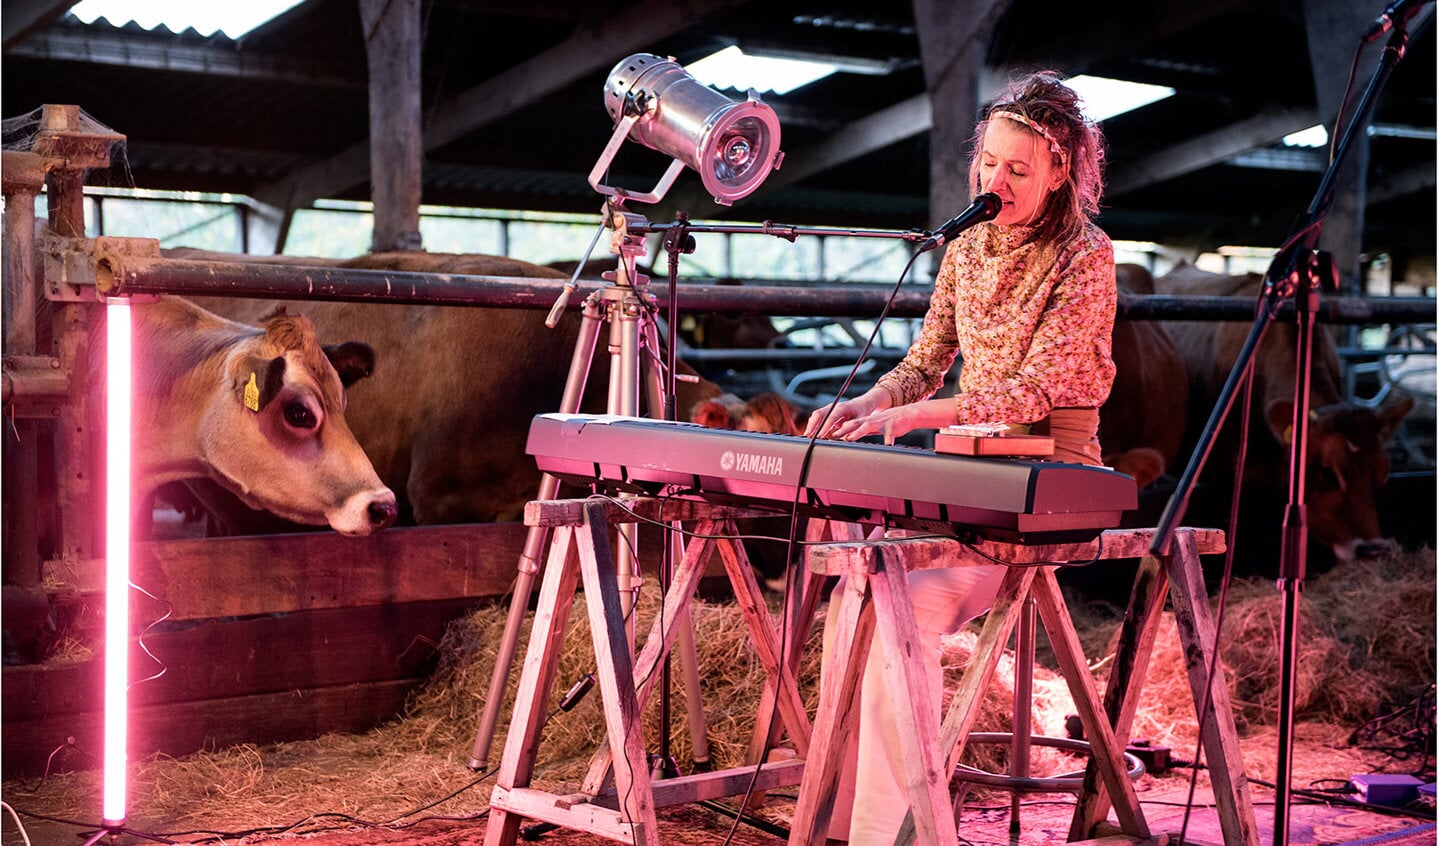 Marieke Ruesink speelt tussen de koeien. Foto: Rene Moorman